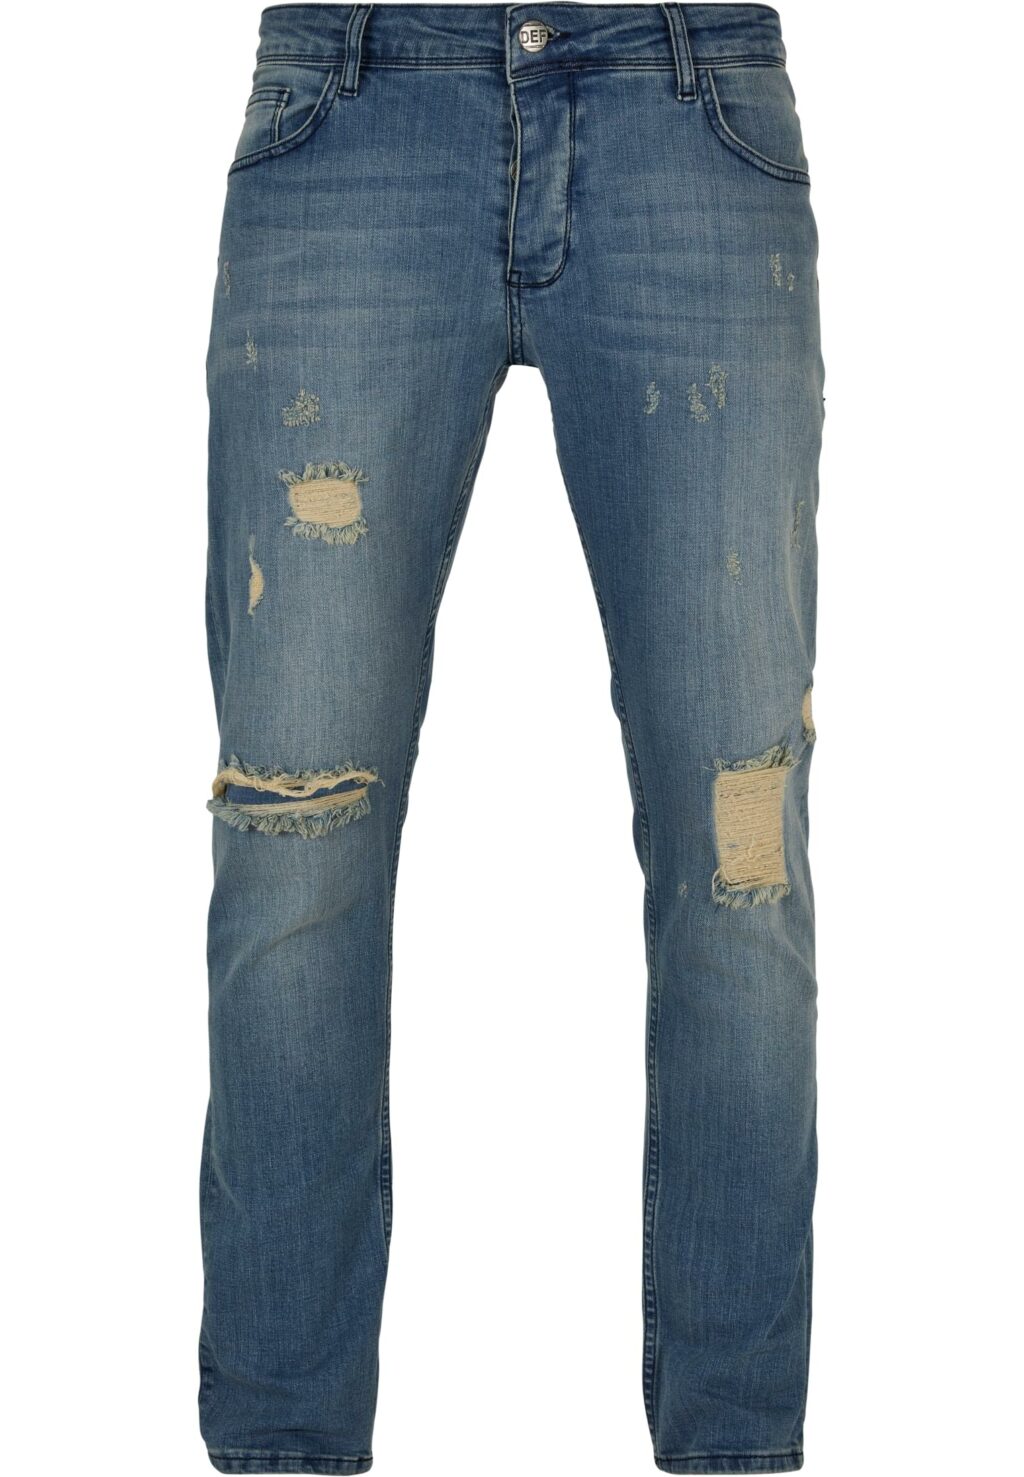 Castor Slim Fit Jeans blue DFJS173